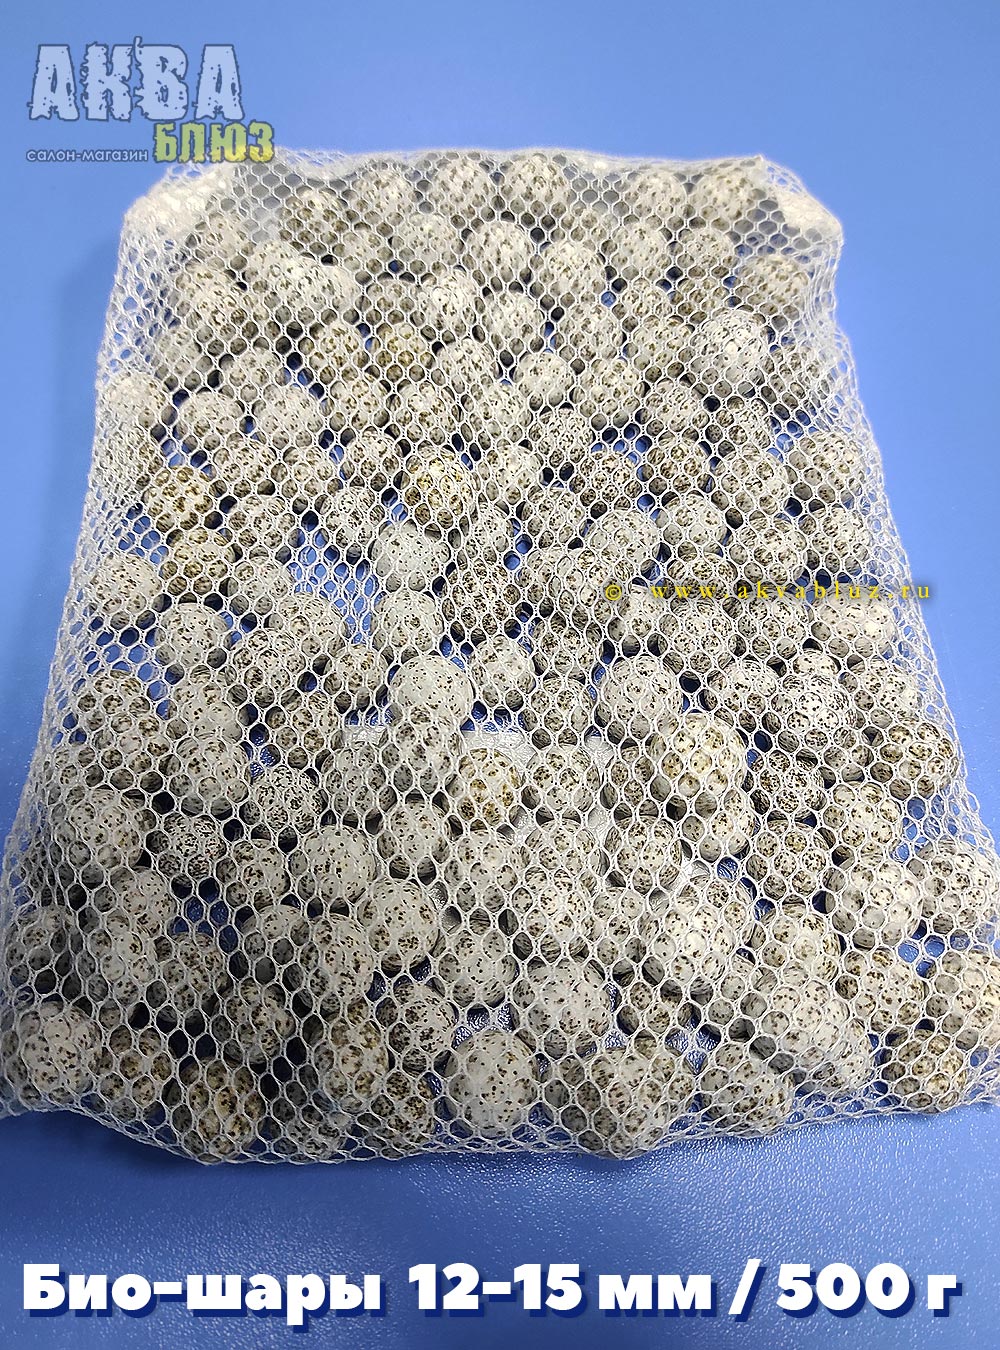 Био-шарики 12-15 мм, 500 г | 520 руб